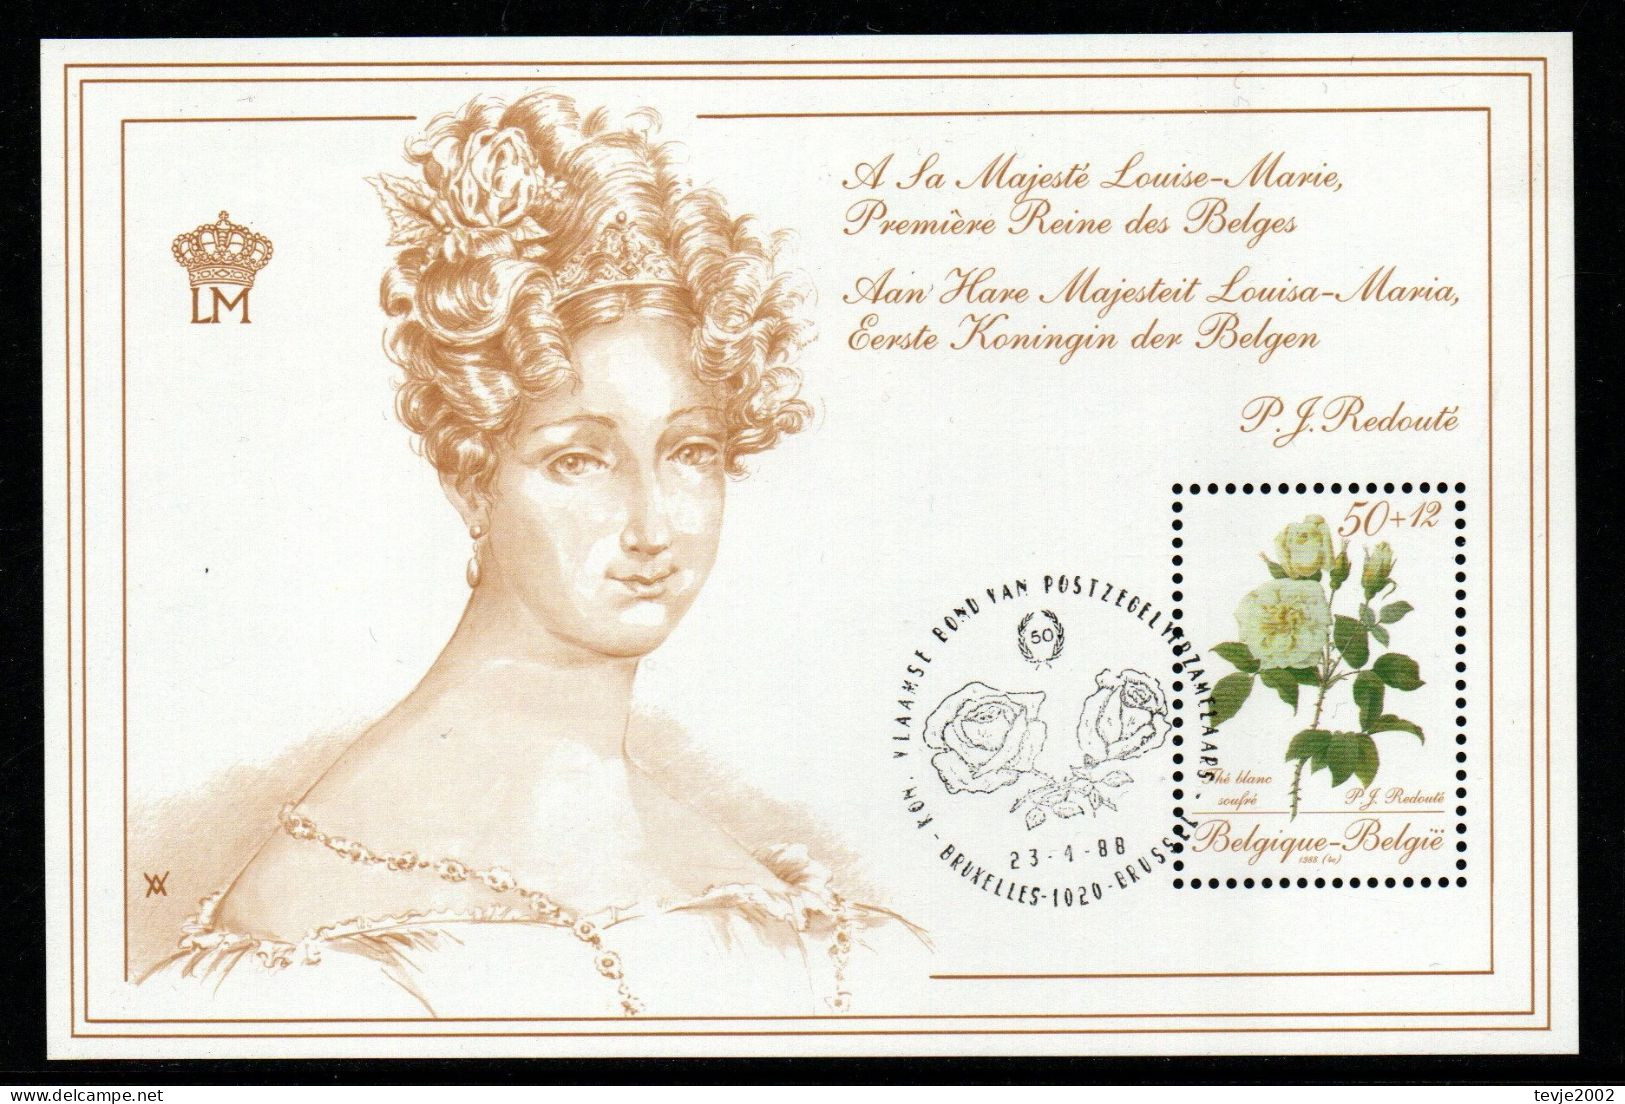 Belgien 1988 - Mi.Nr. Block 57 - Gestempelt Used - Blumen Flowers Rosen Flowers - Roses